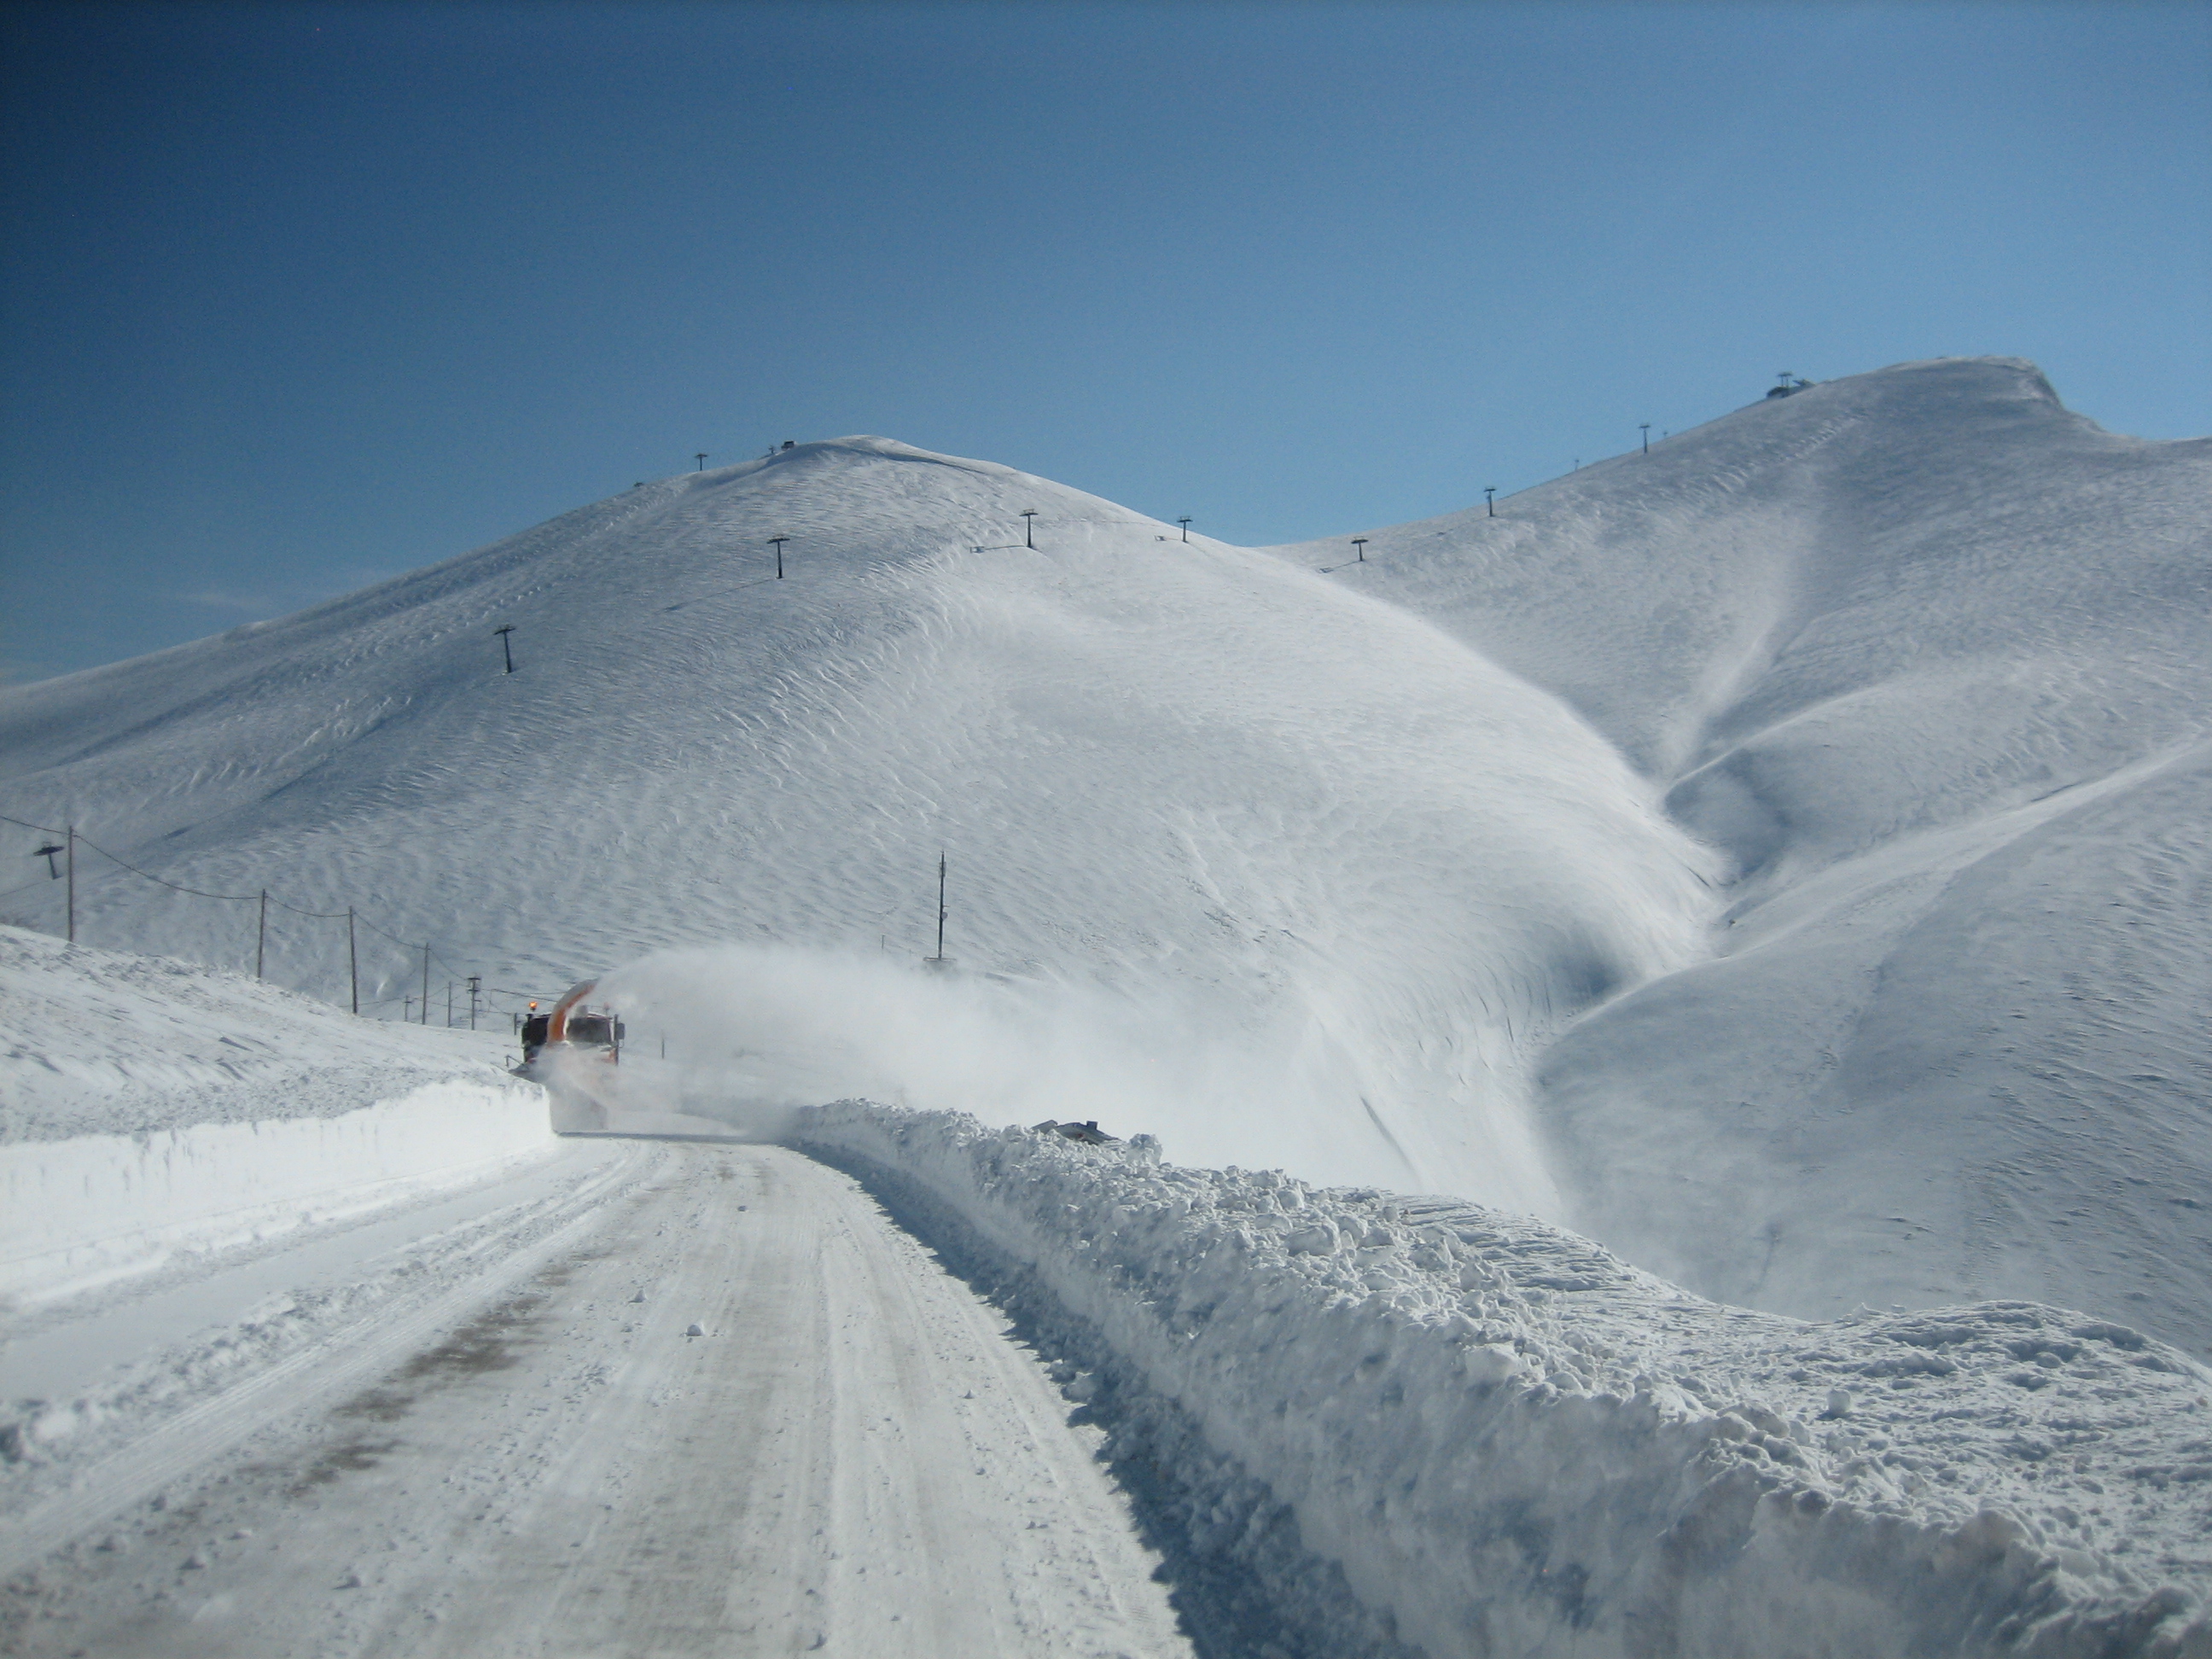 Road to ski center of Falakro 21 march 2015, Falakro Ski Resort